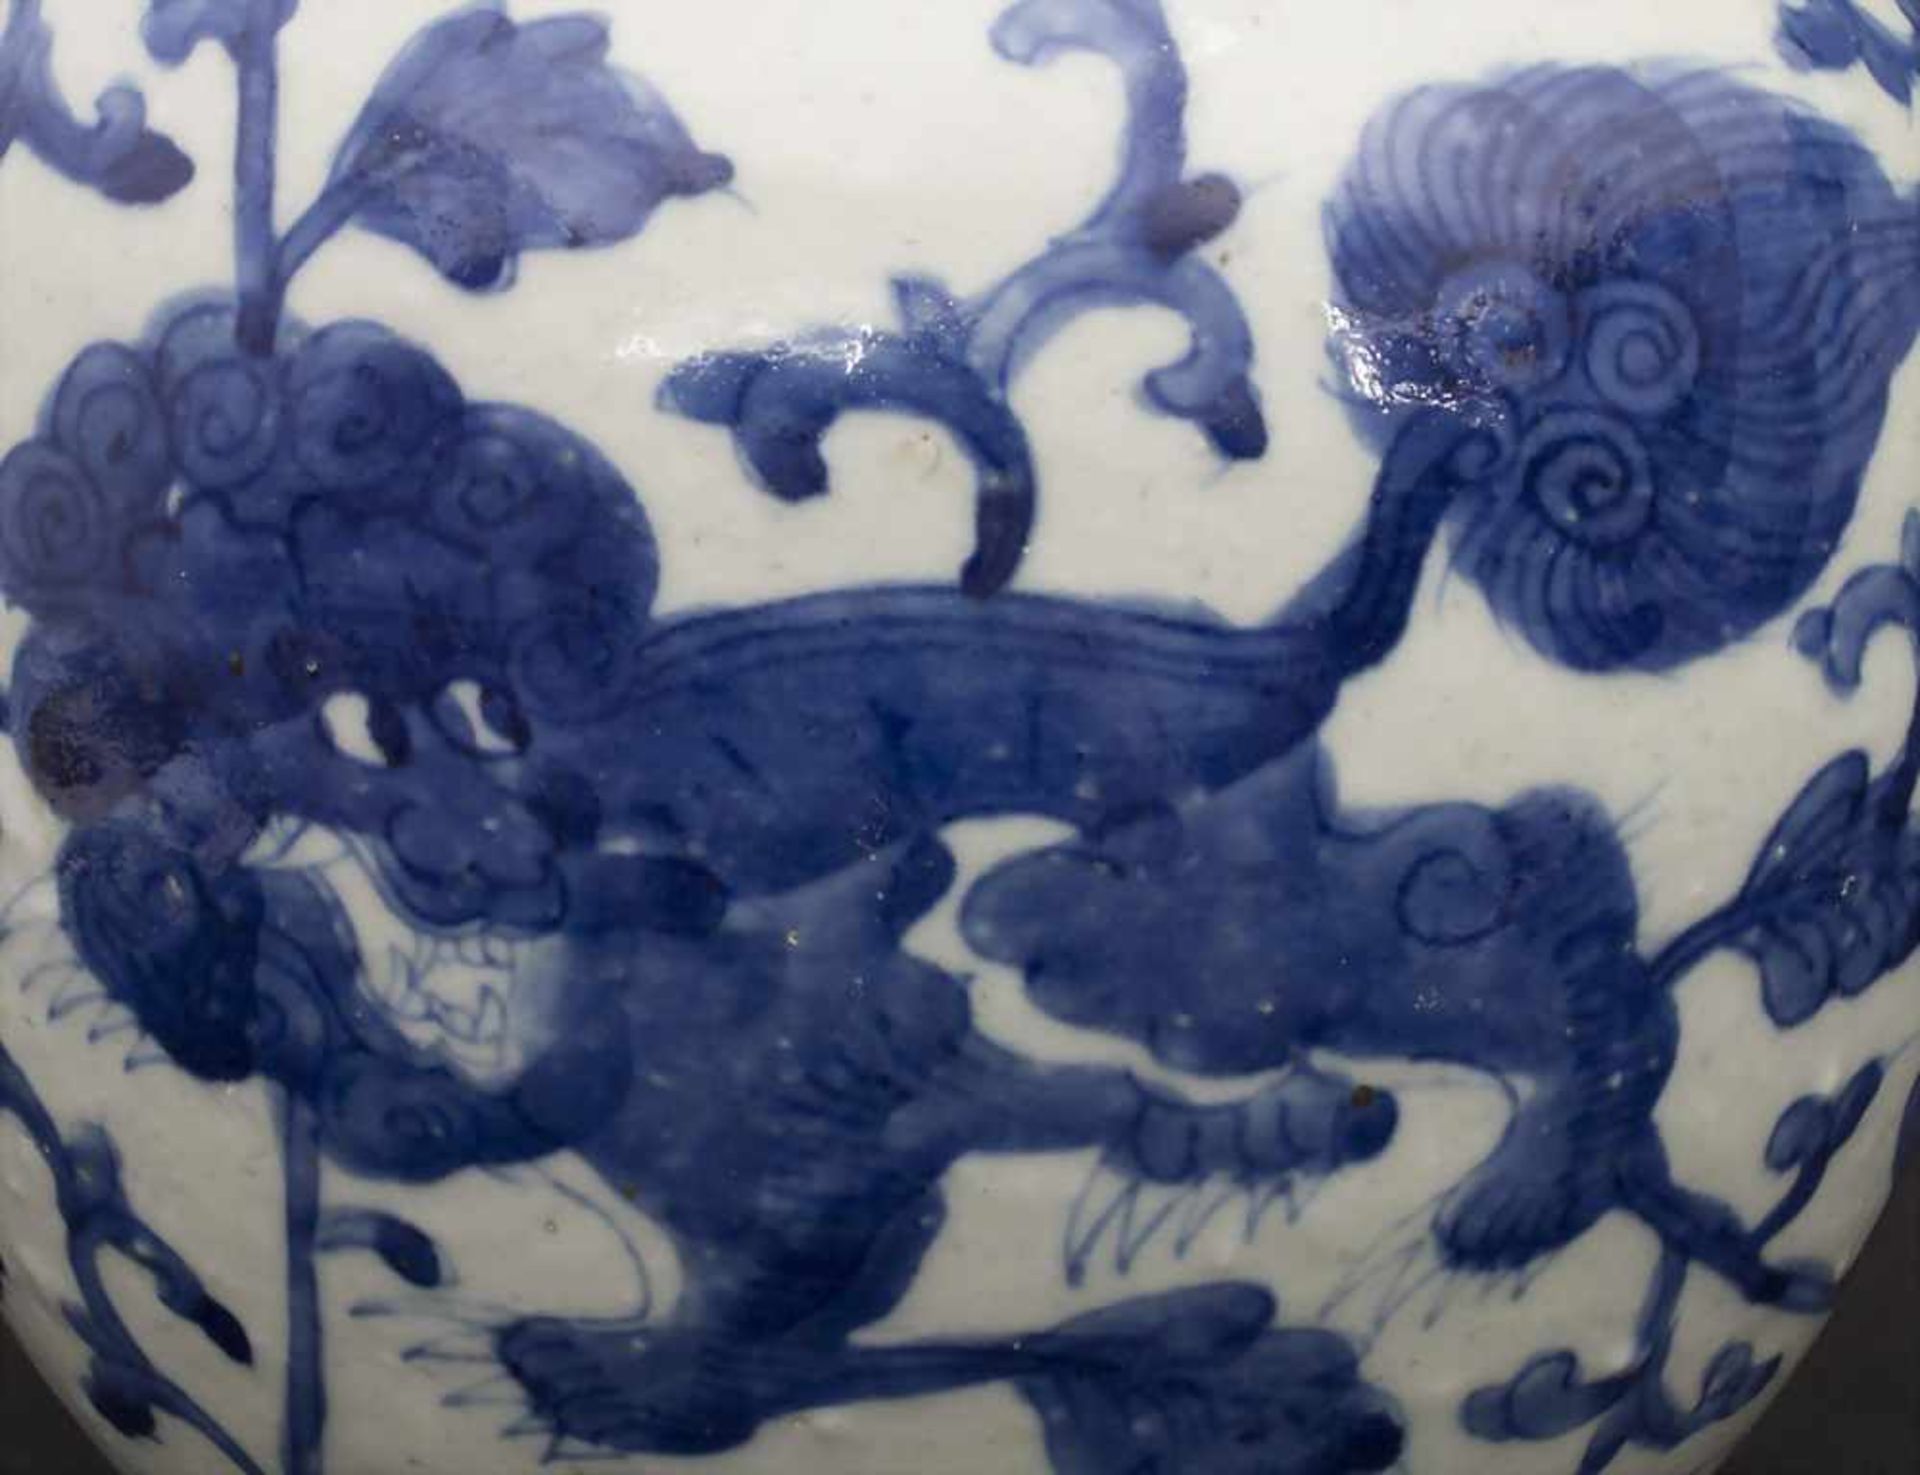 Schultertopf mit unterglasurblauer Malerei, Qing Dynastie, China, 18./19. Jh. - Image 11 of 11